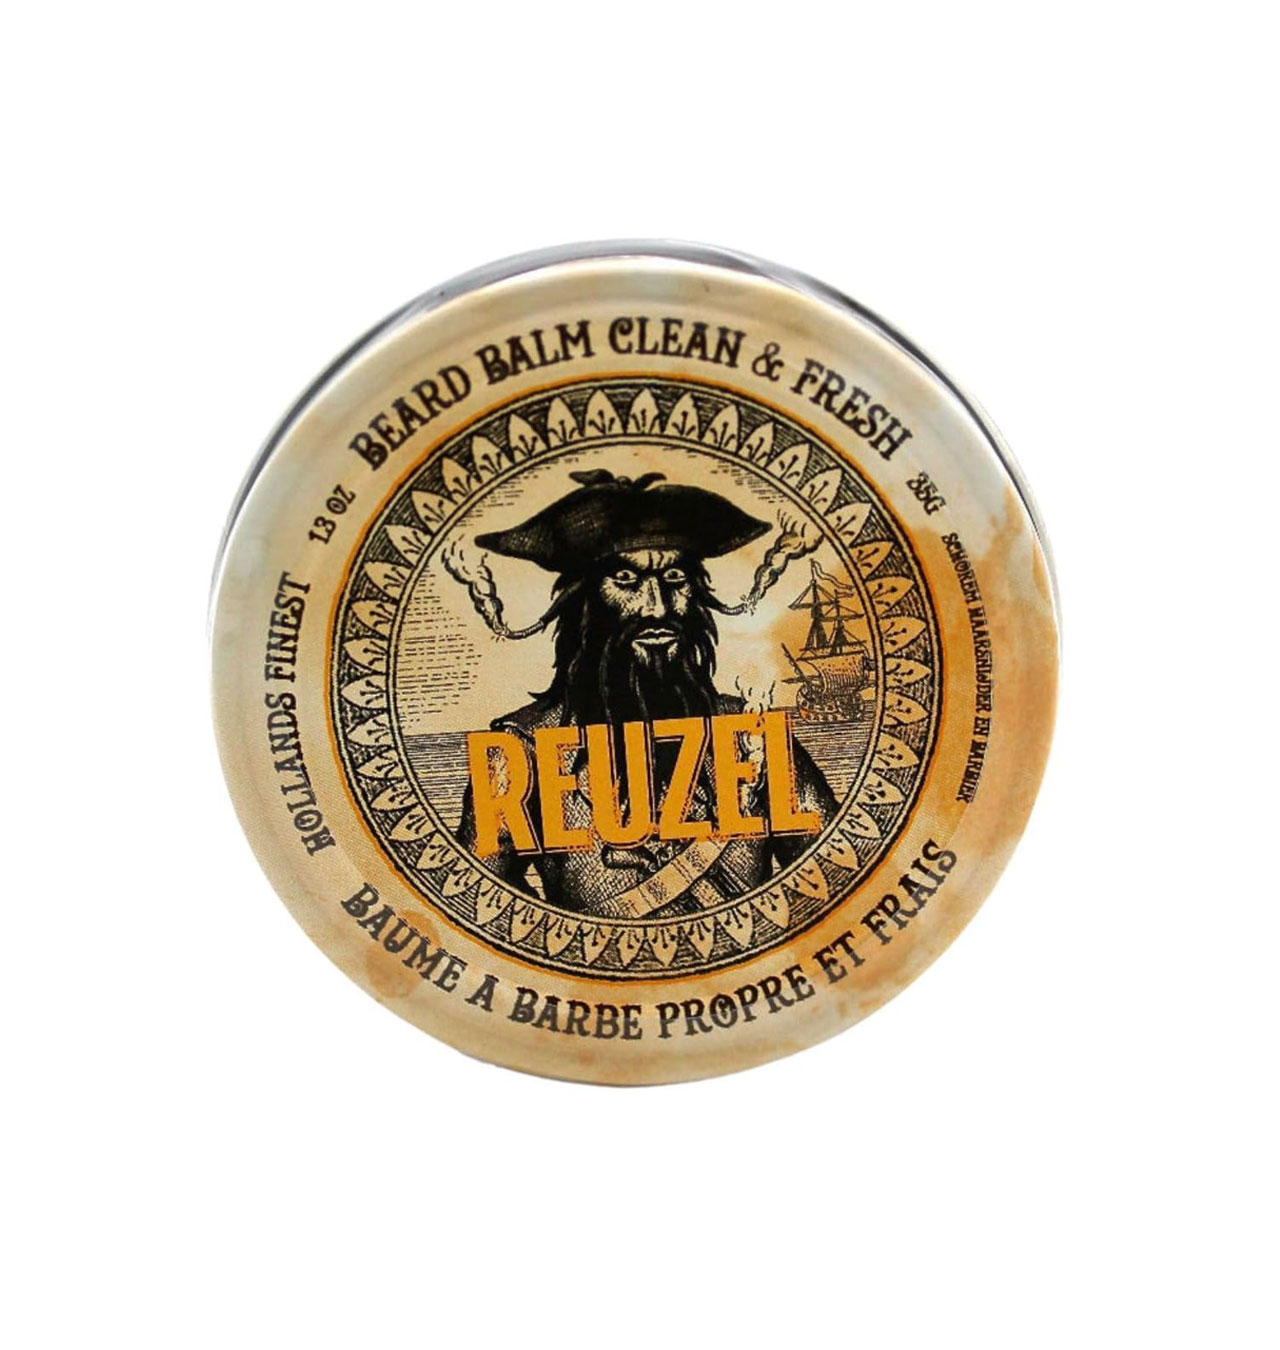 Reuzel - Clean & Fresh Beard Balm - 1.3oz/35g